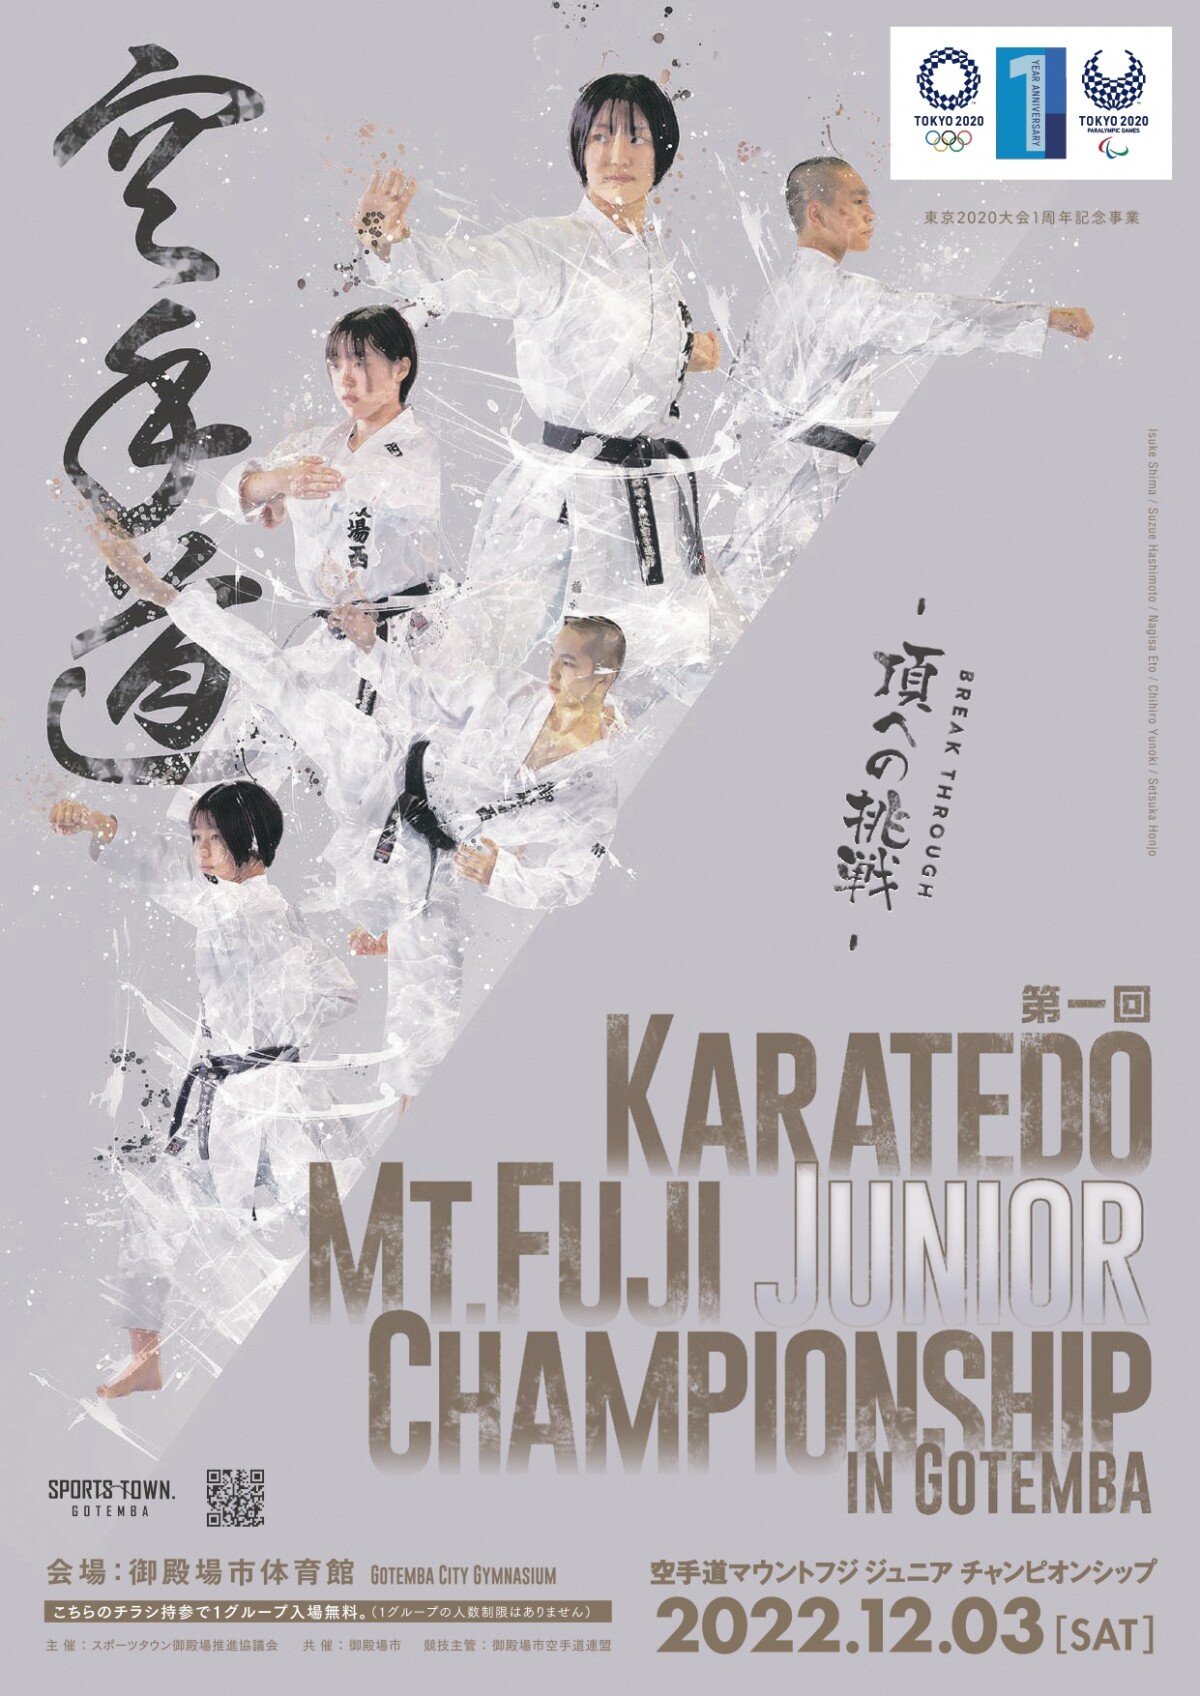 Youtube Live配信決定!空手道 Karatedo Mt.Fuji Junior Championship in Gotemba